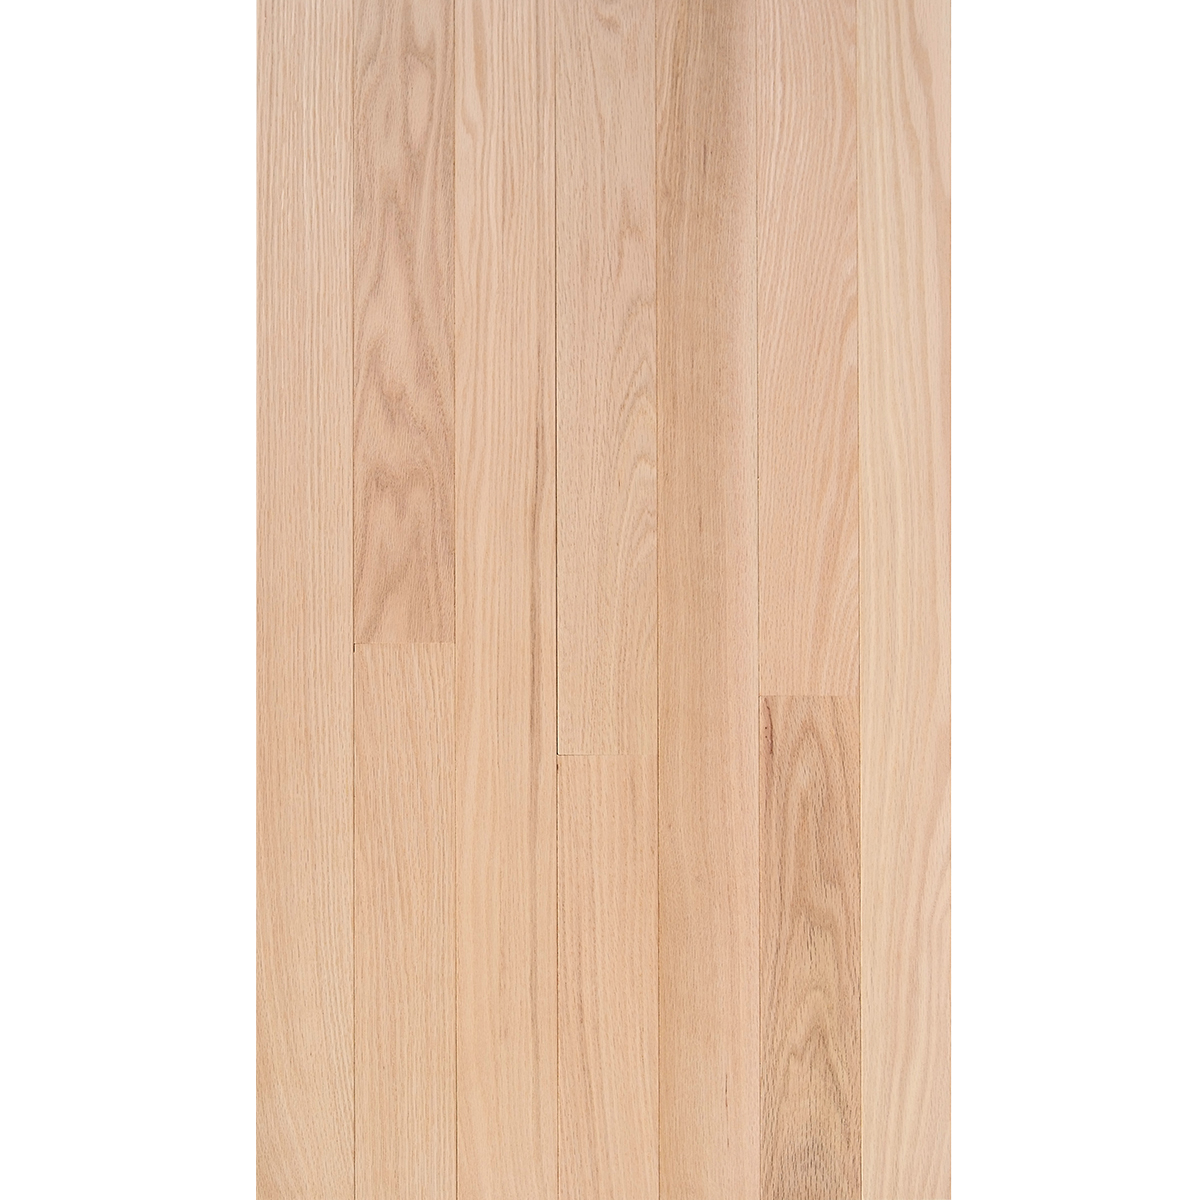 Red Oak 3 4 X 1 Select Grade Flooring, 3 1 4 Red Oak Hardwood Flooring